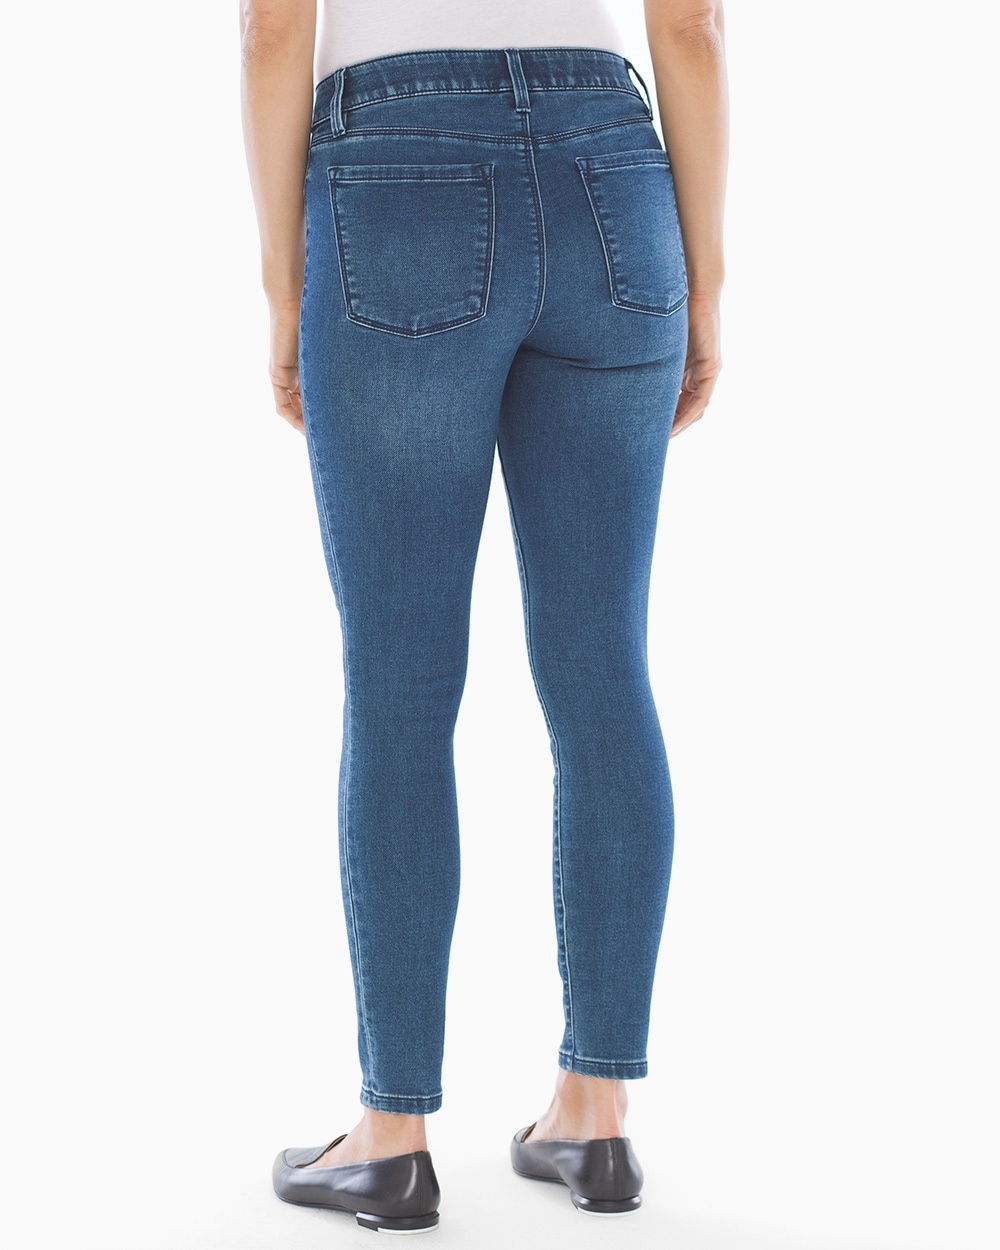 Indigo RG - Soma Slimming Style Pocket 5 Essentials Jeans